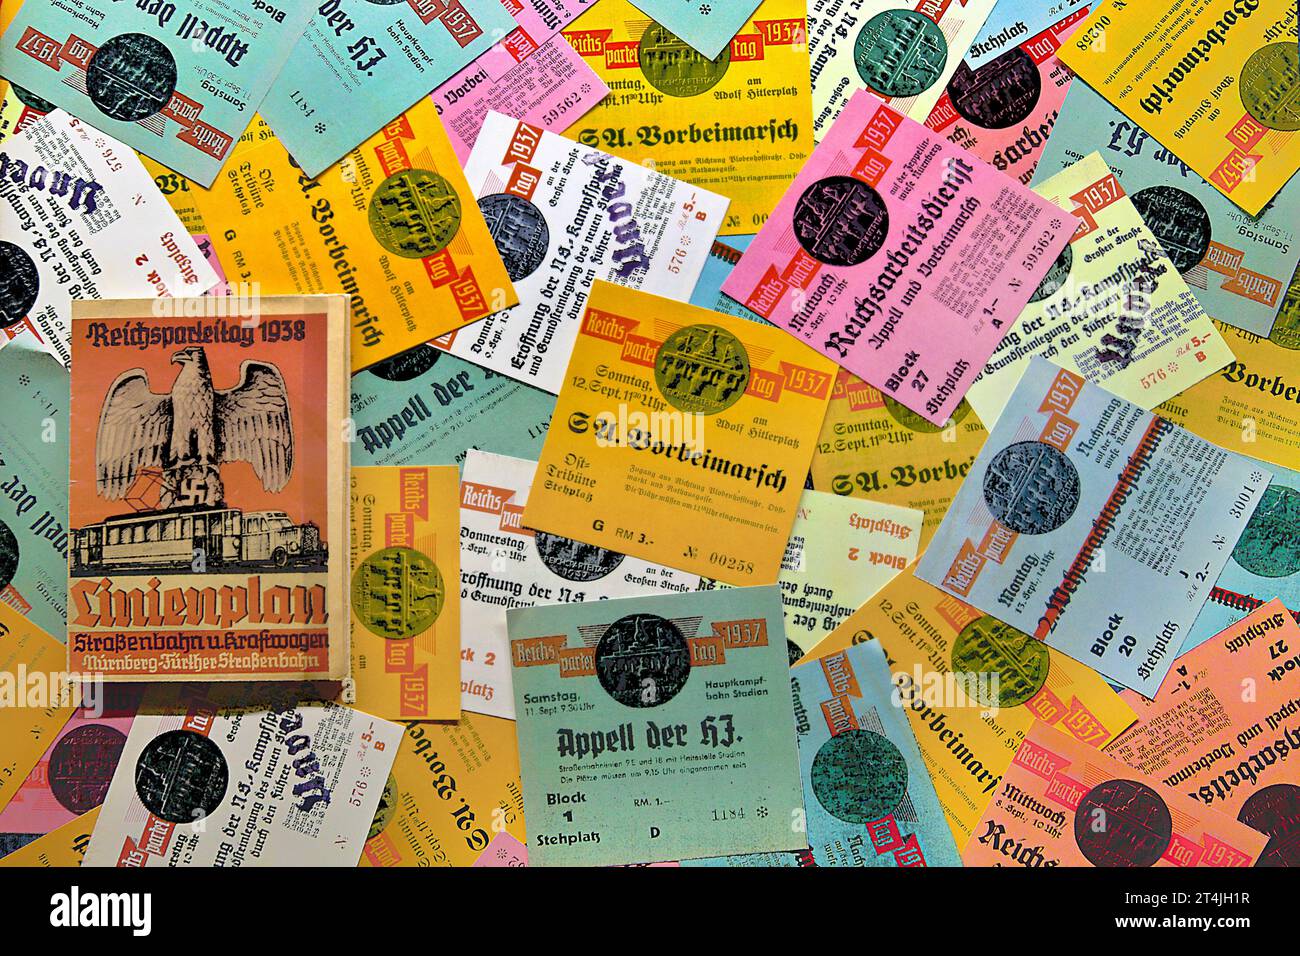 Nazi Rally Tickets from Nuremberg, Germany Stock Photo